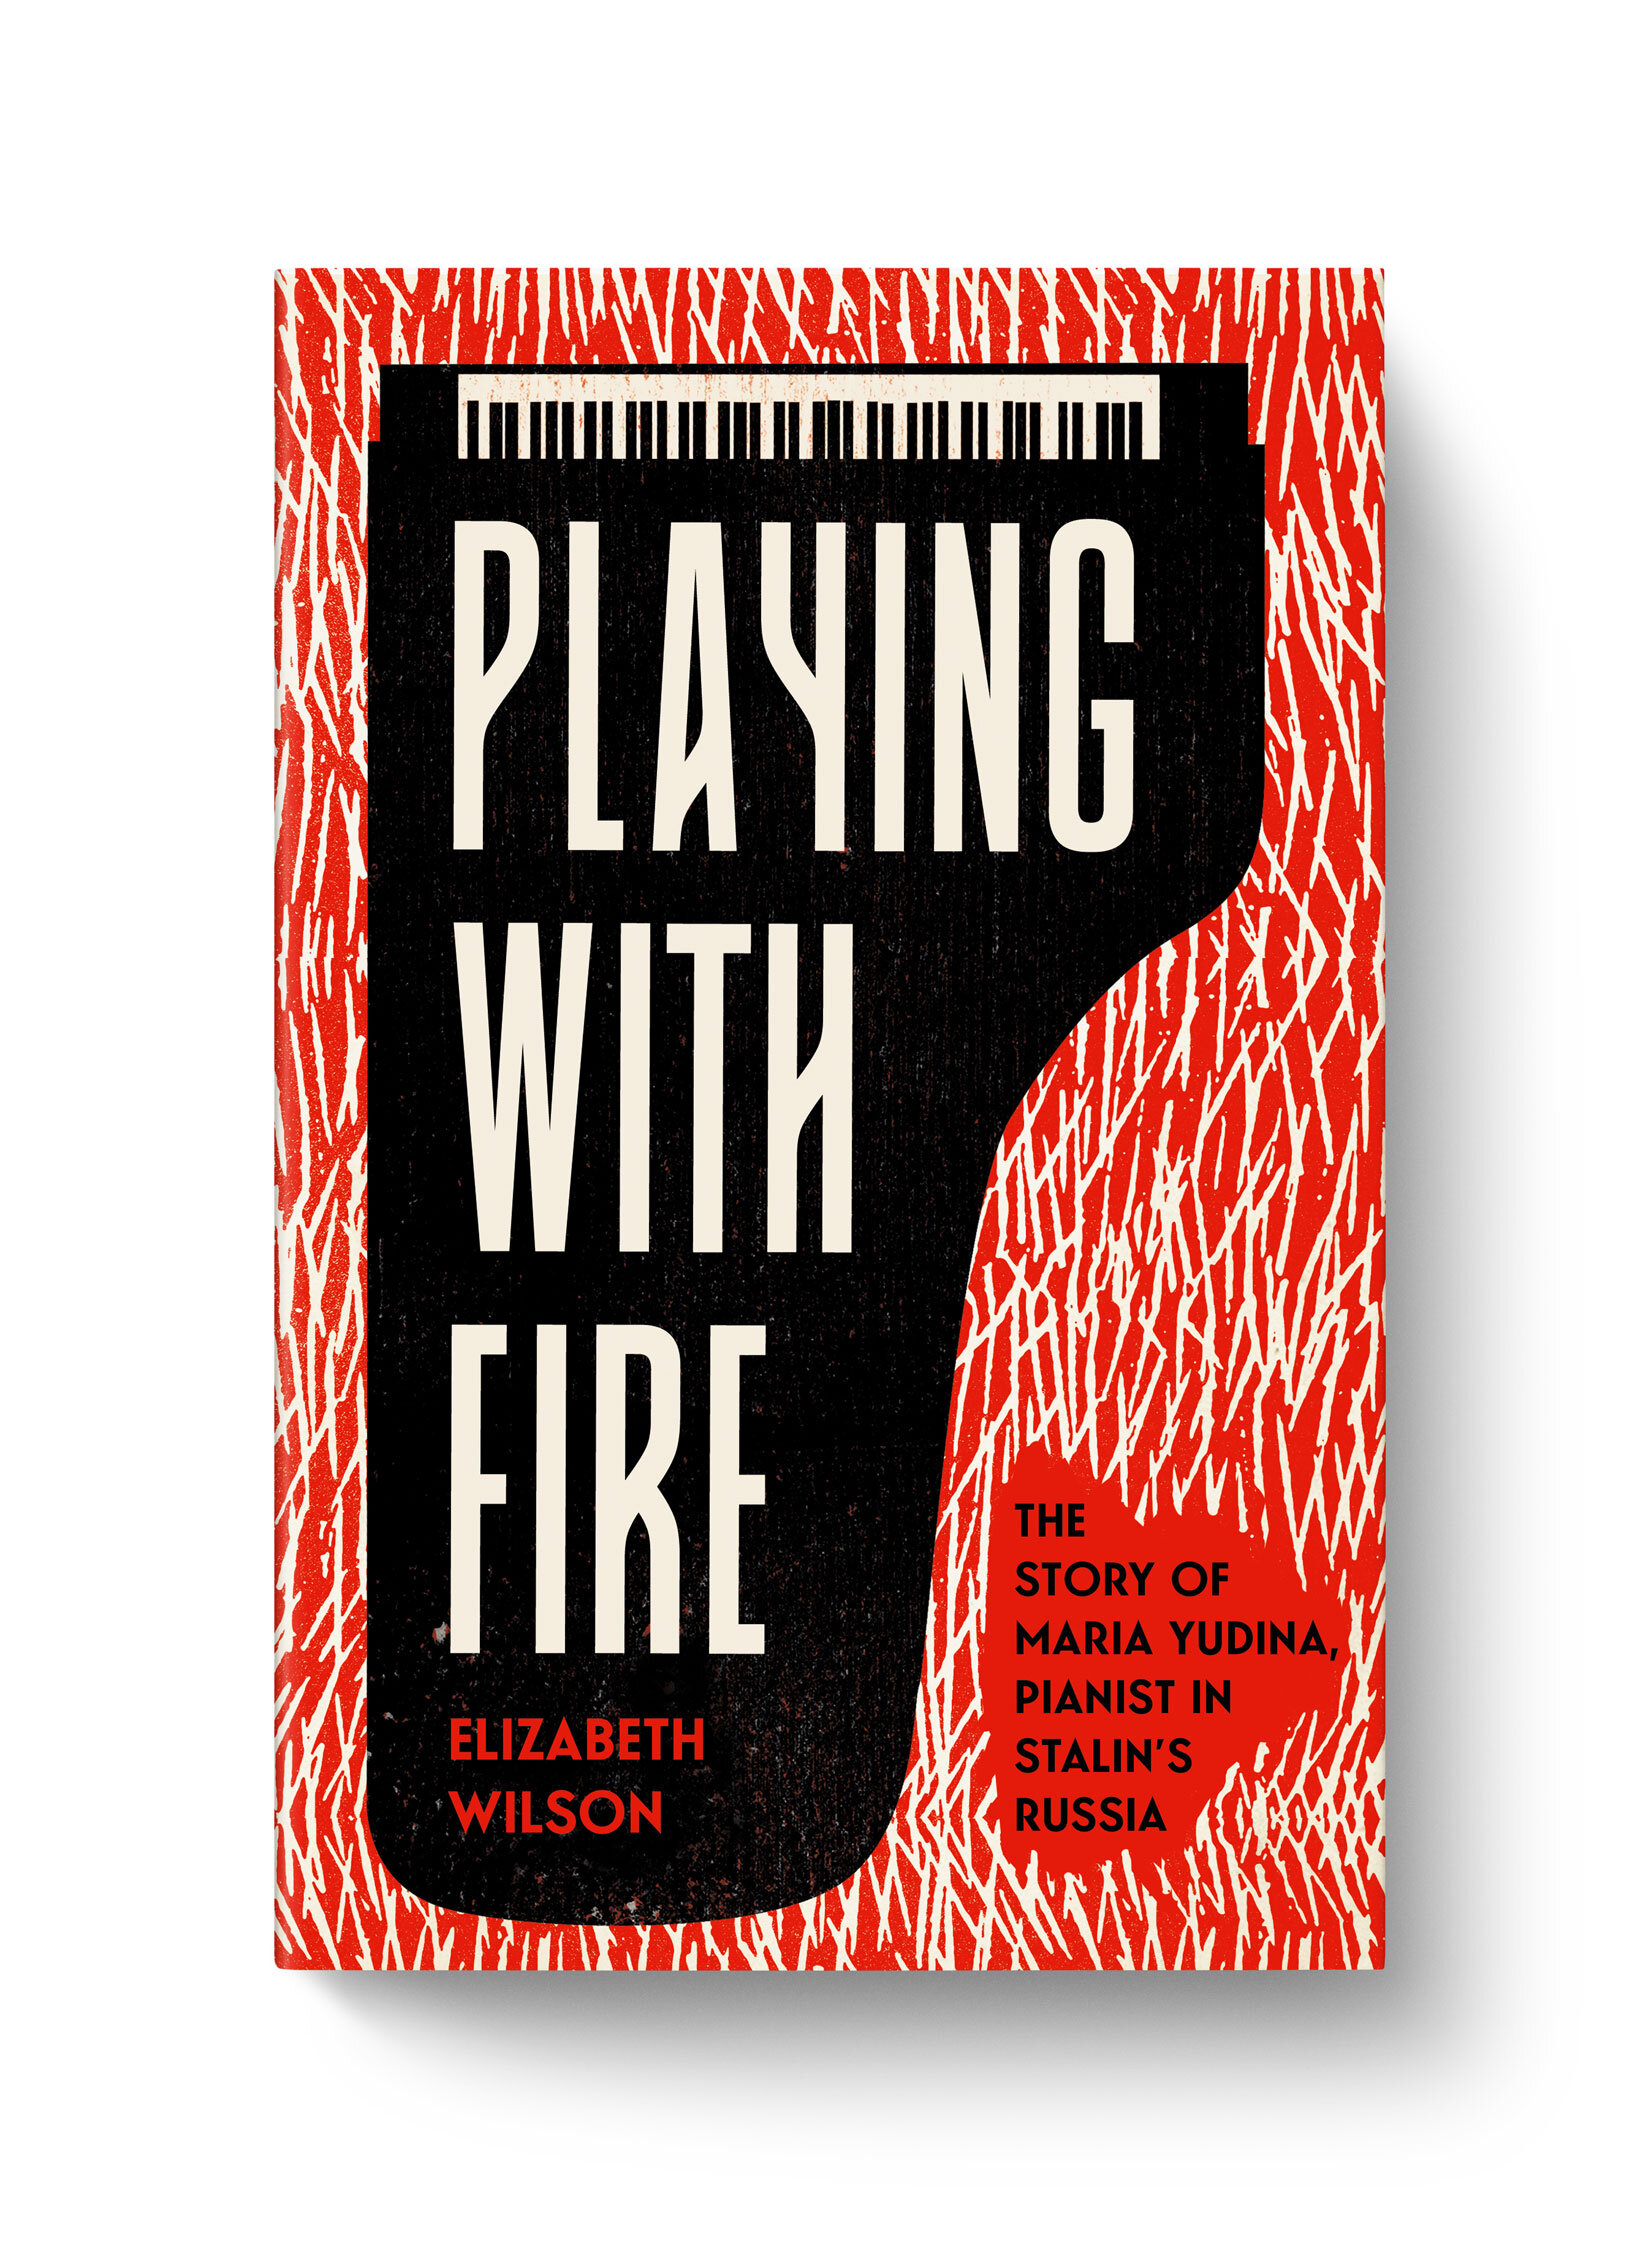   Playing With Fire  Elizabeth Wilson  Yale University Press 